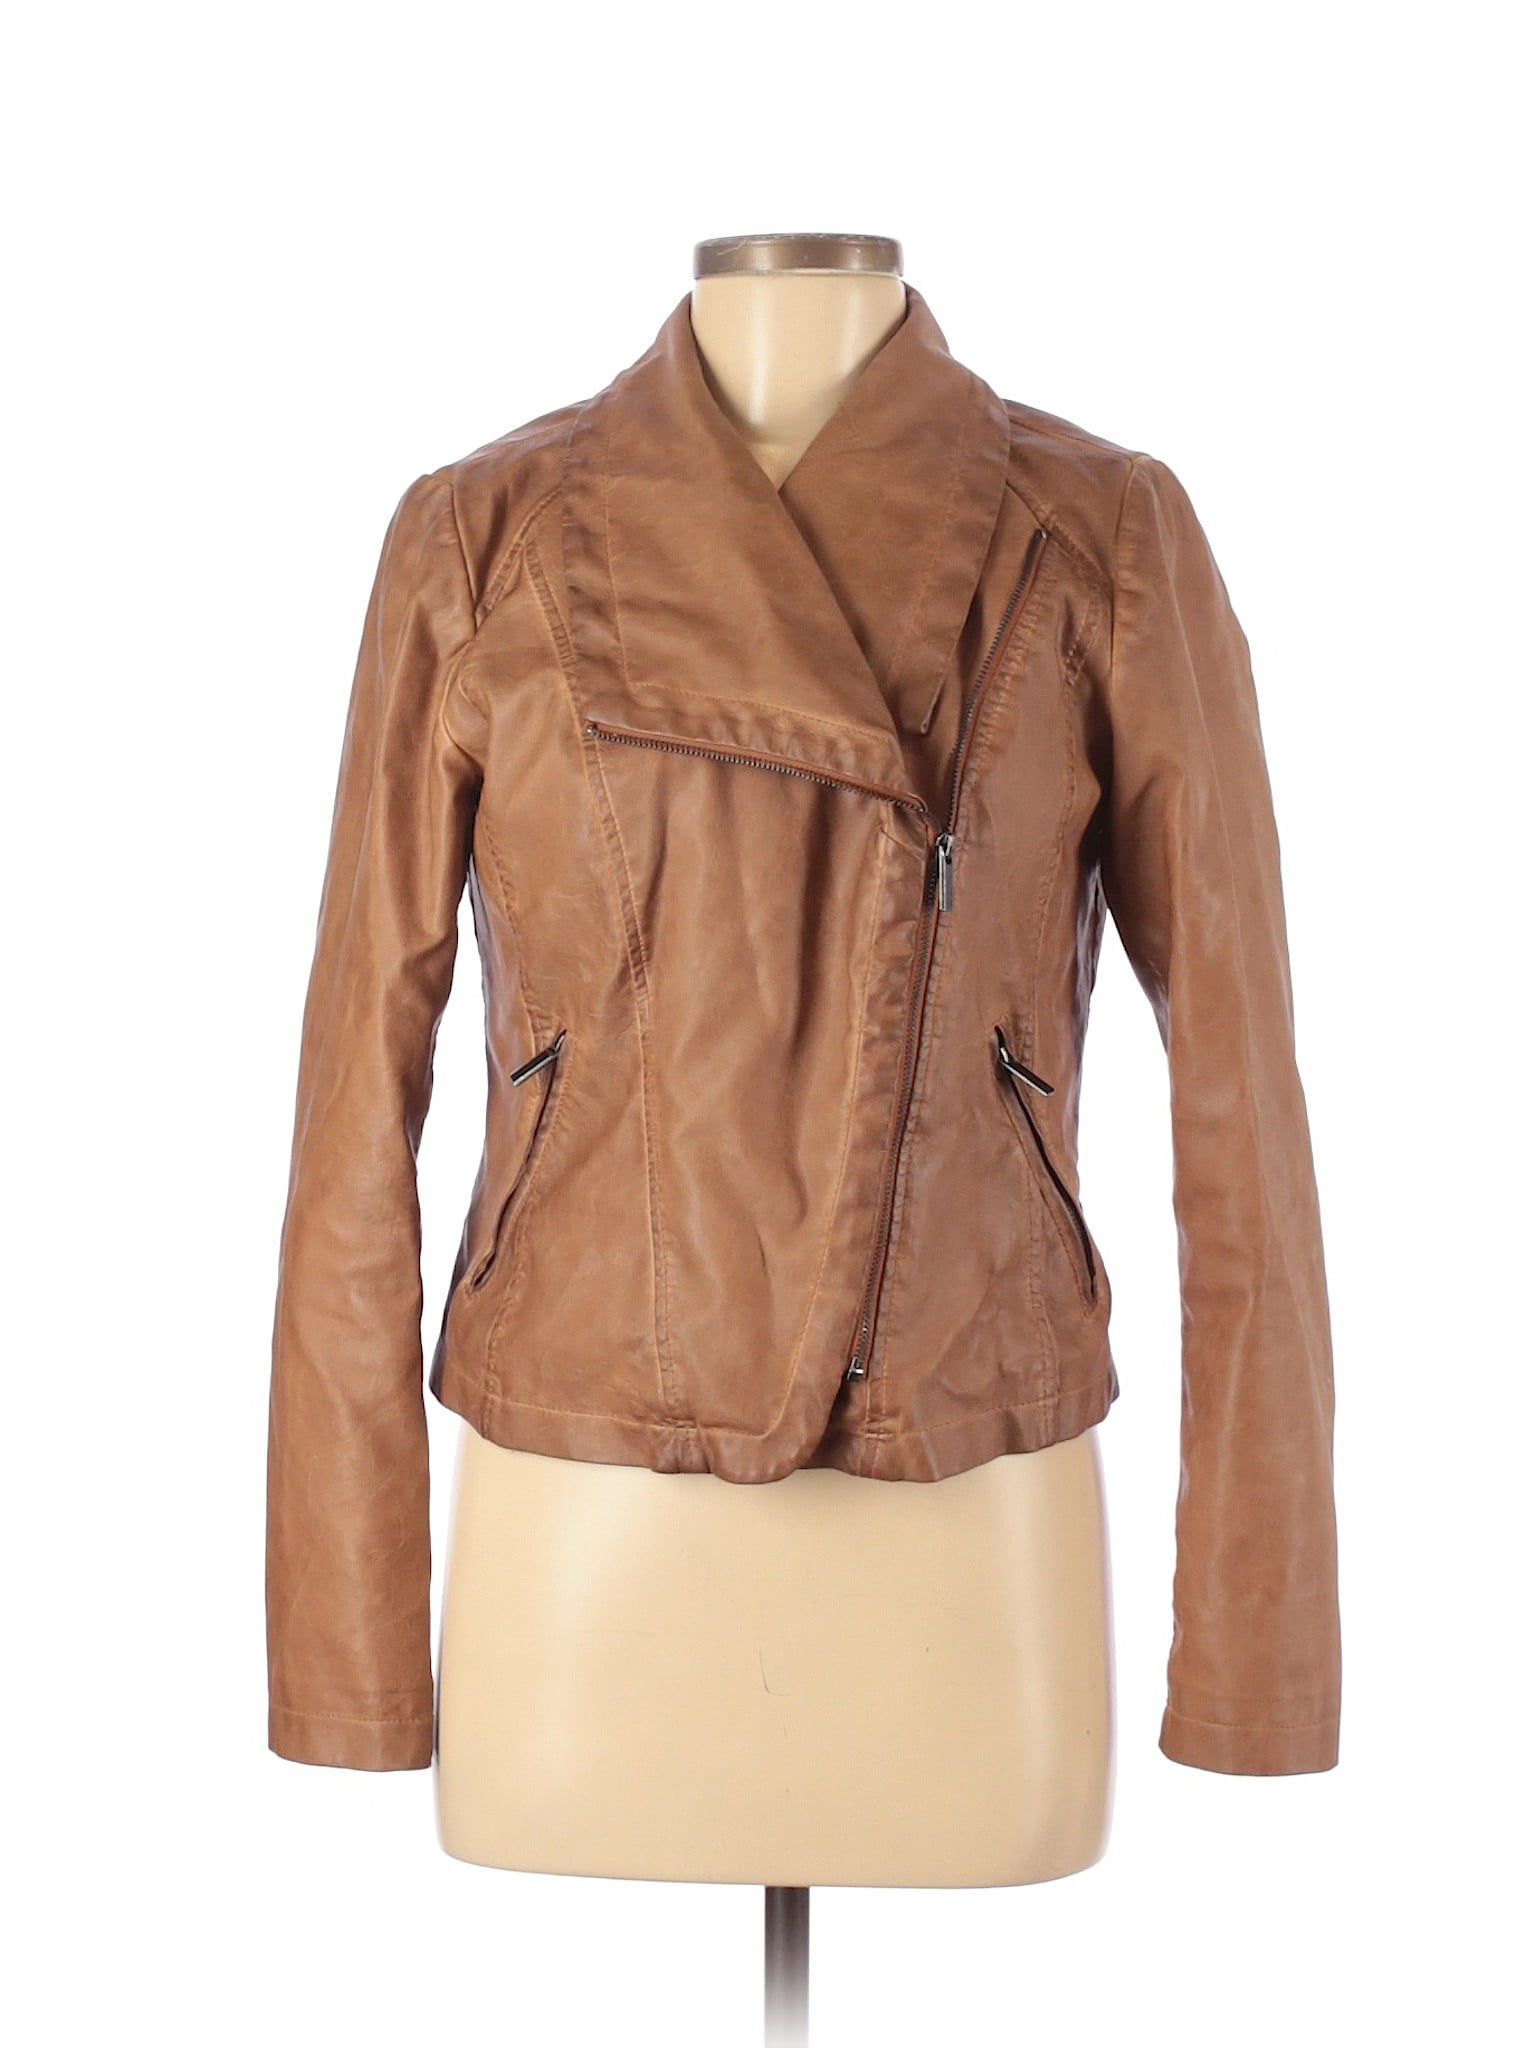 Bagatelle - Pre-Owned Bagatelle Women's Size M Faux Leather Jacket ...